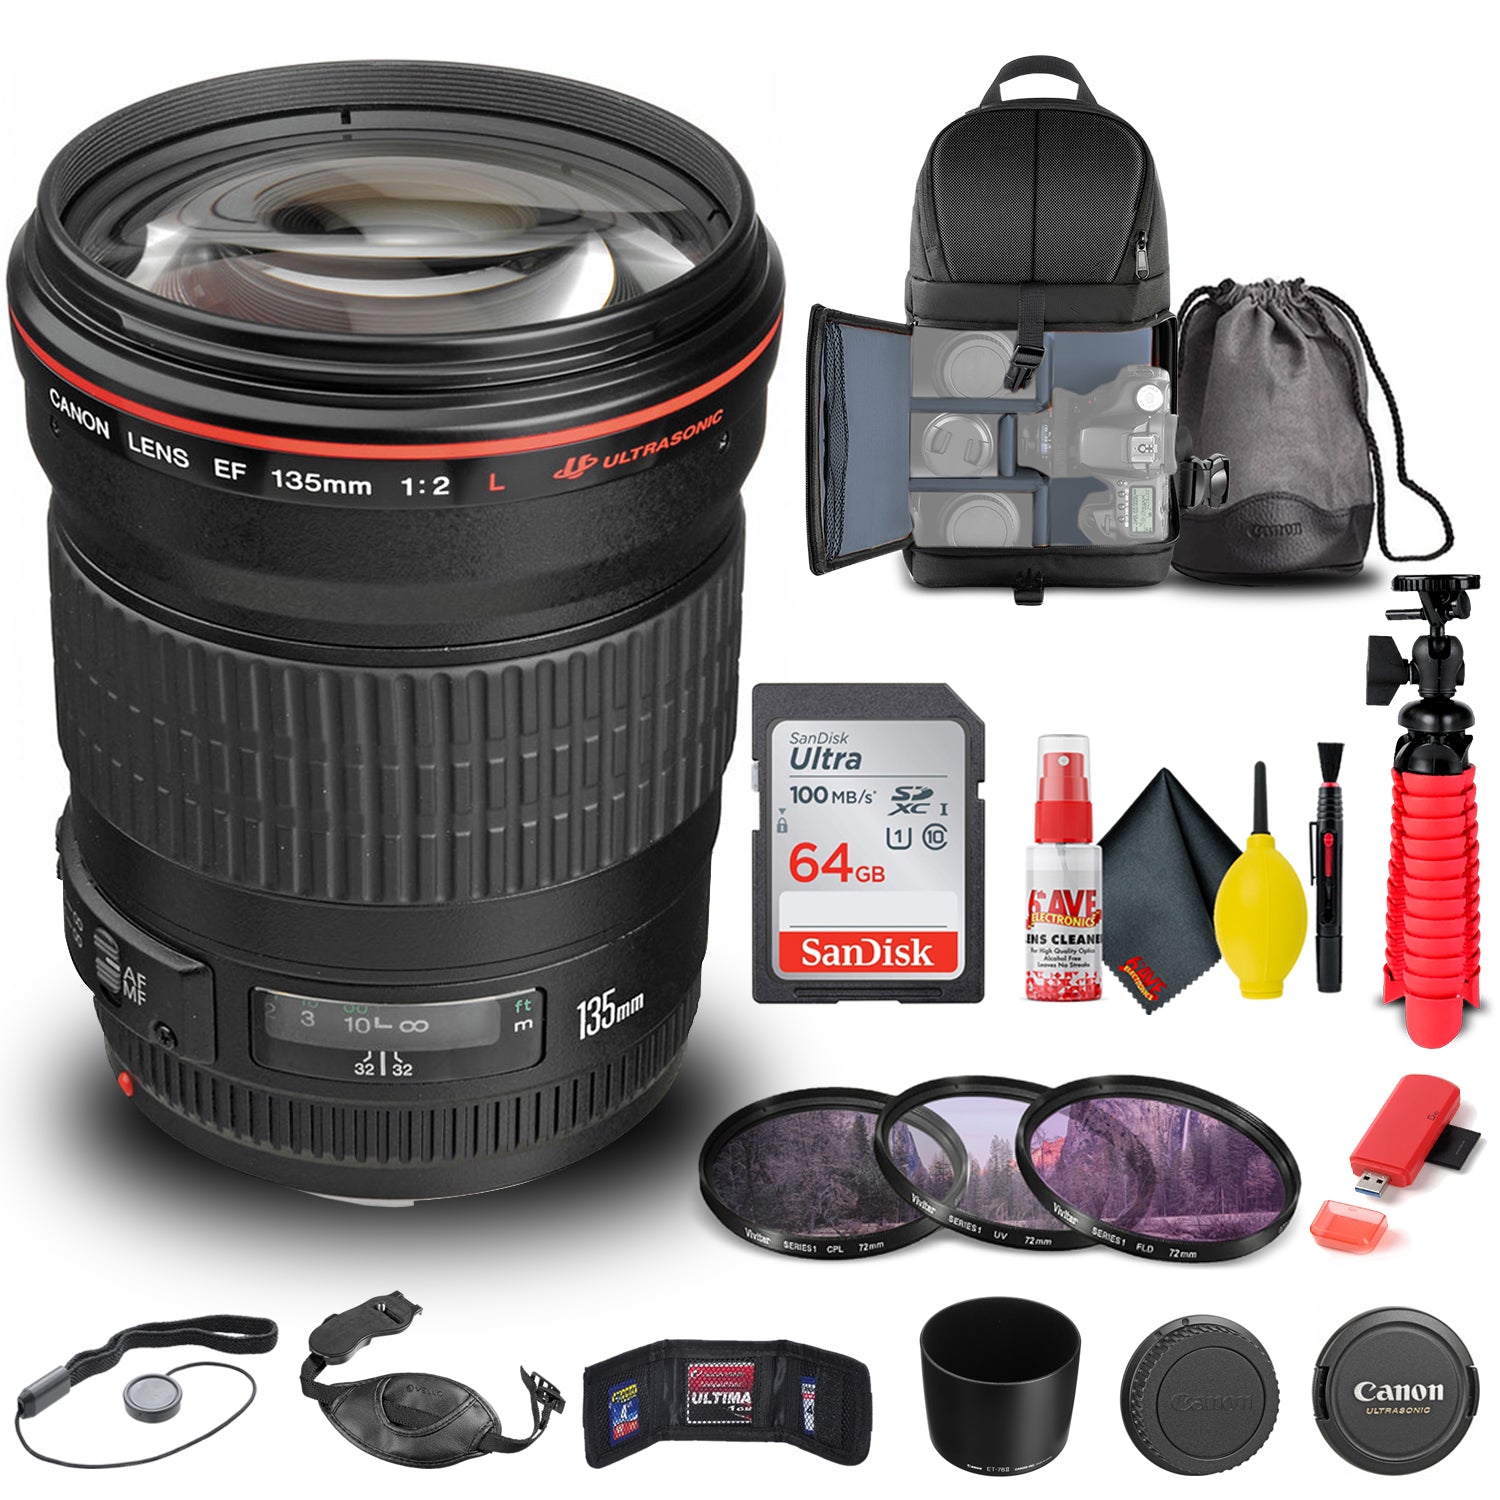 Canon EF 135mm f/2L USM Lens (2520A004) + Filter + BackPack + 64GB Card + More